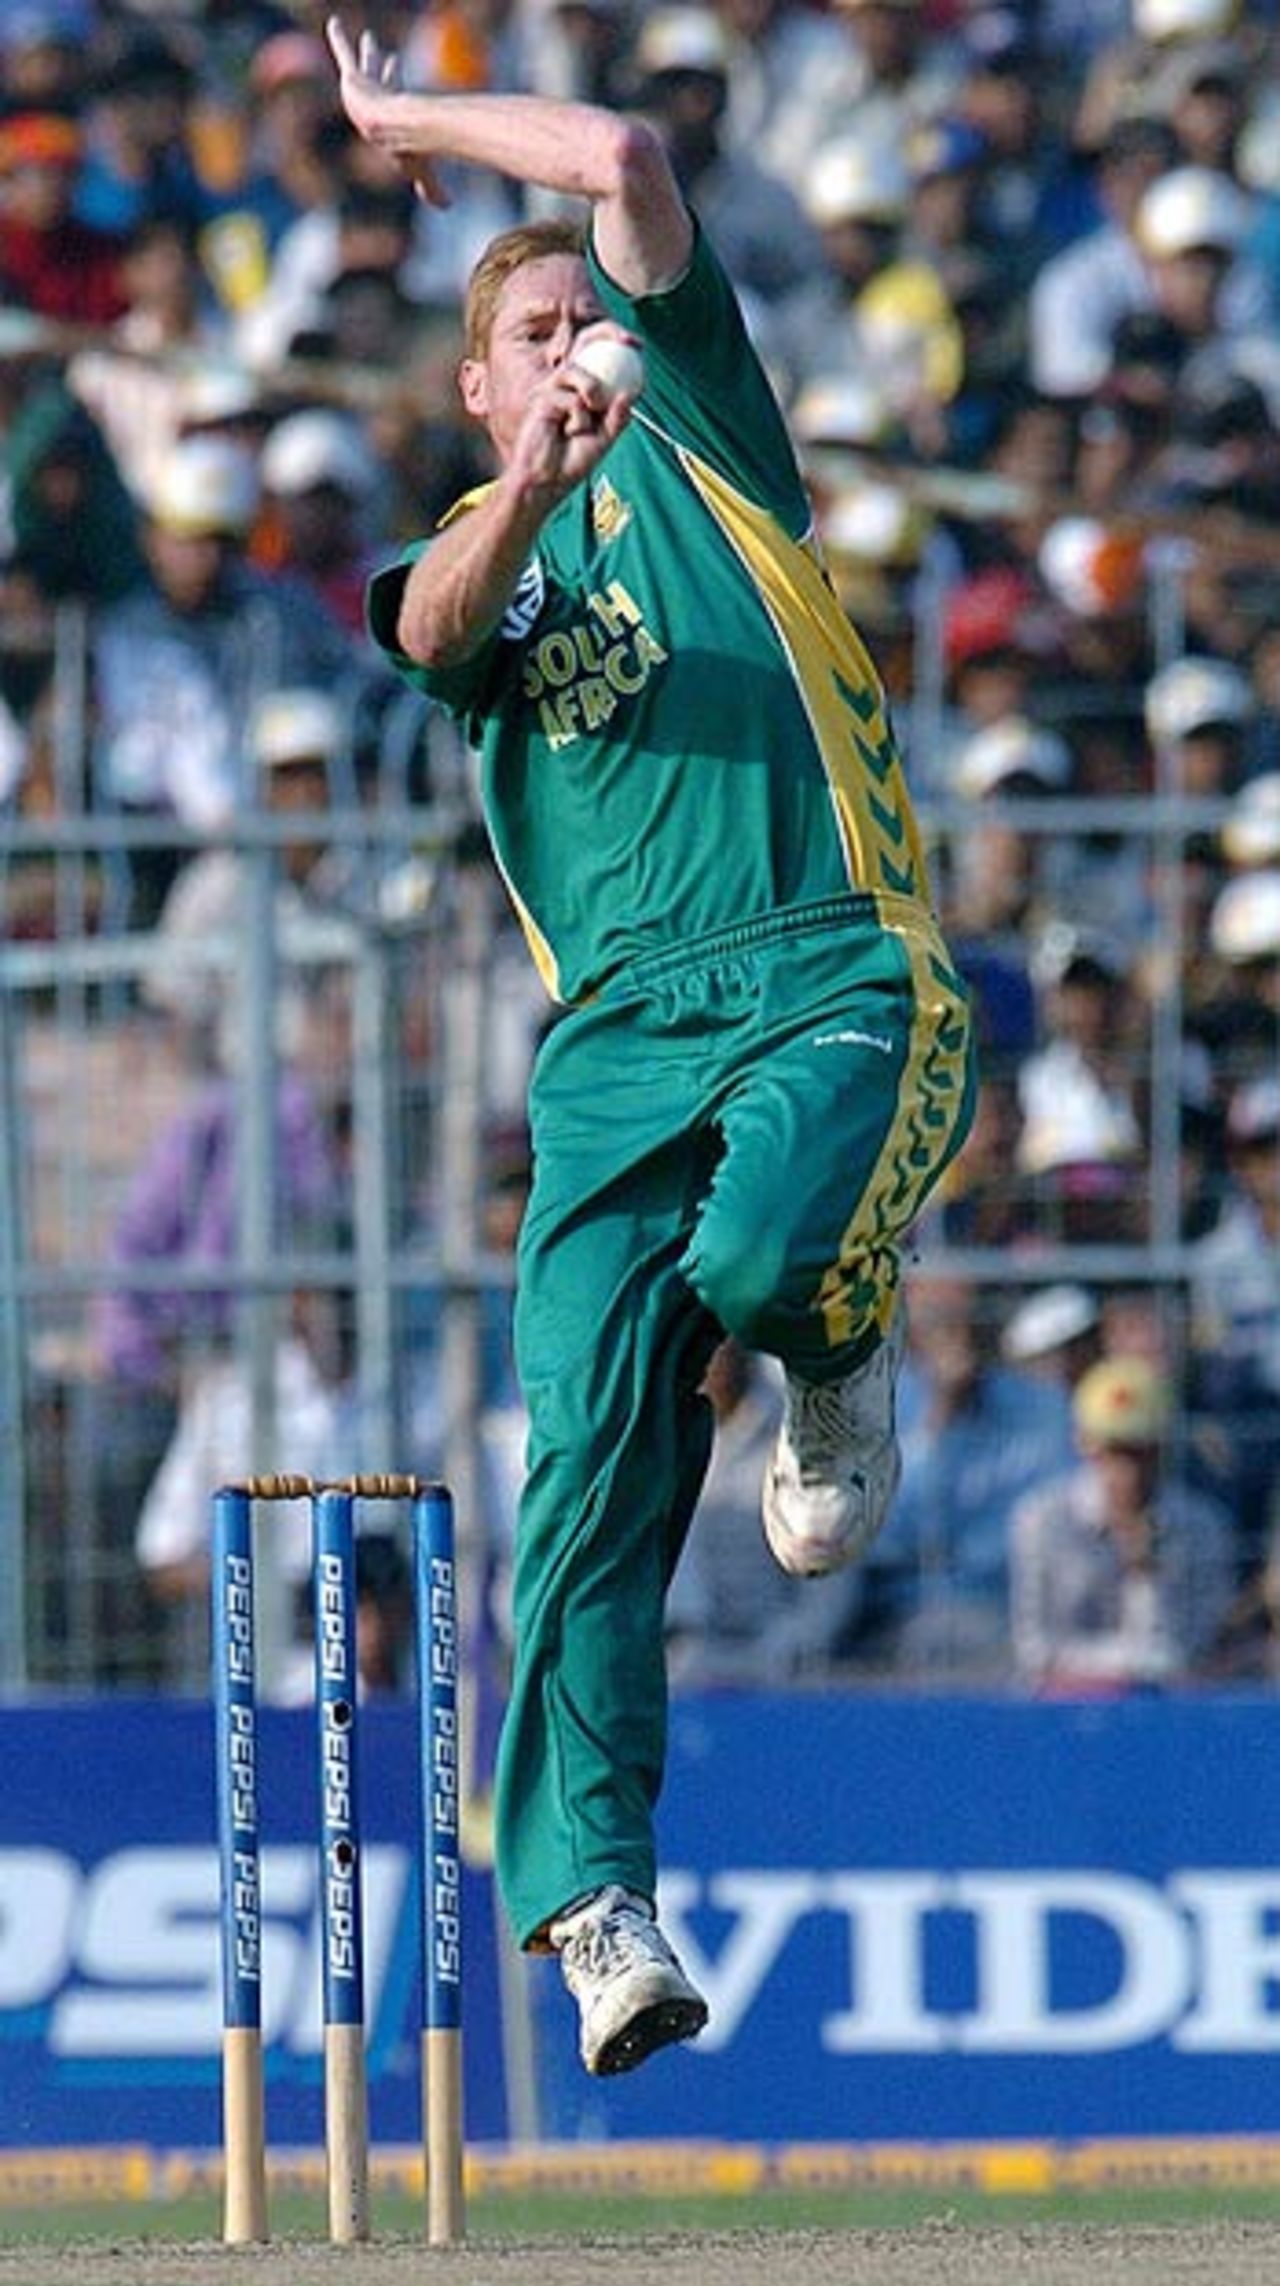 Shaun Pollock delivered a fine opening spell, India v South Africa, 4th ODI, Kolkata, November 25, 2005